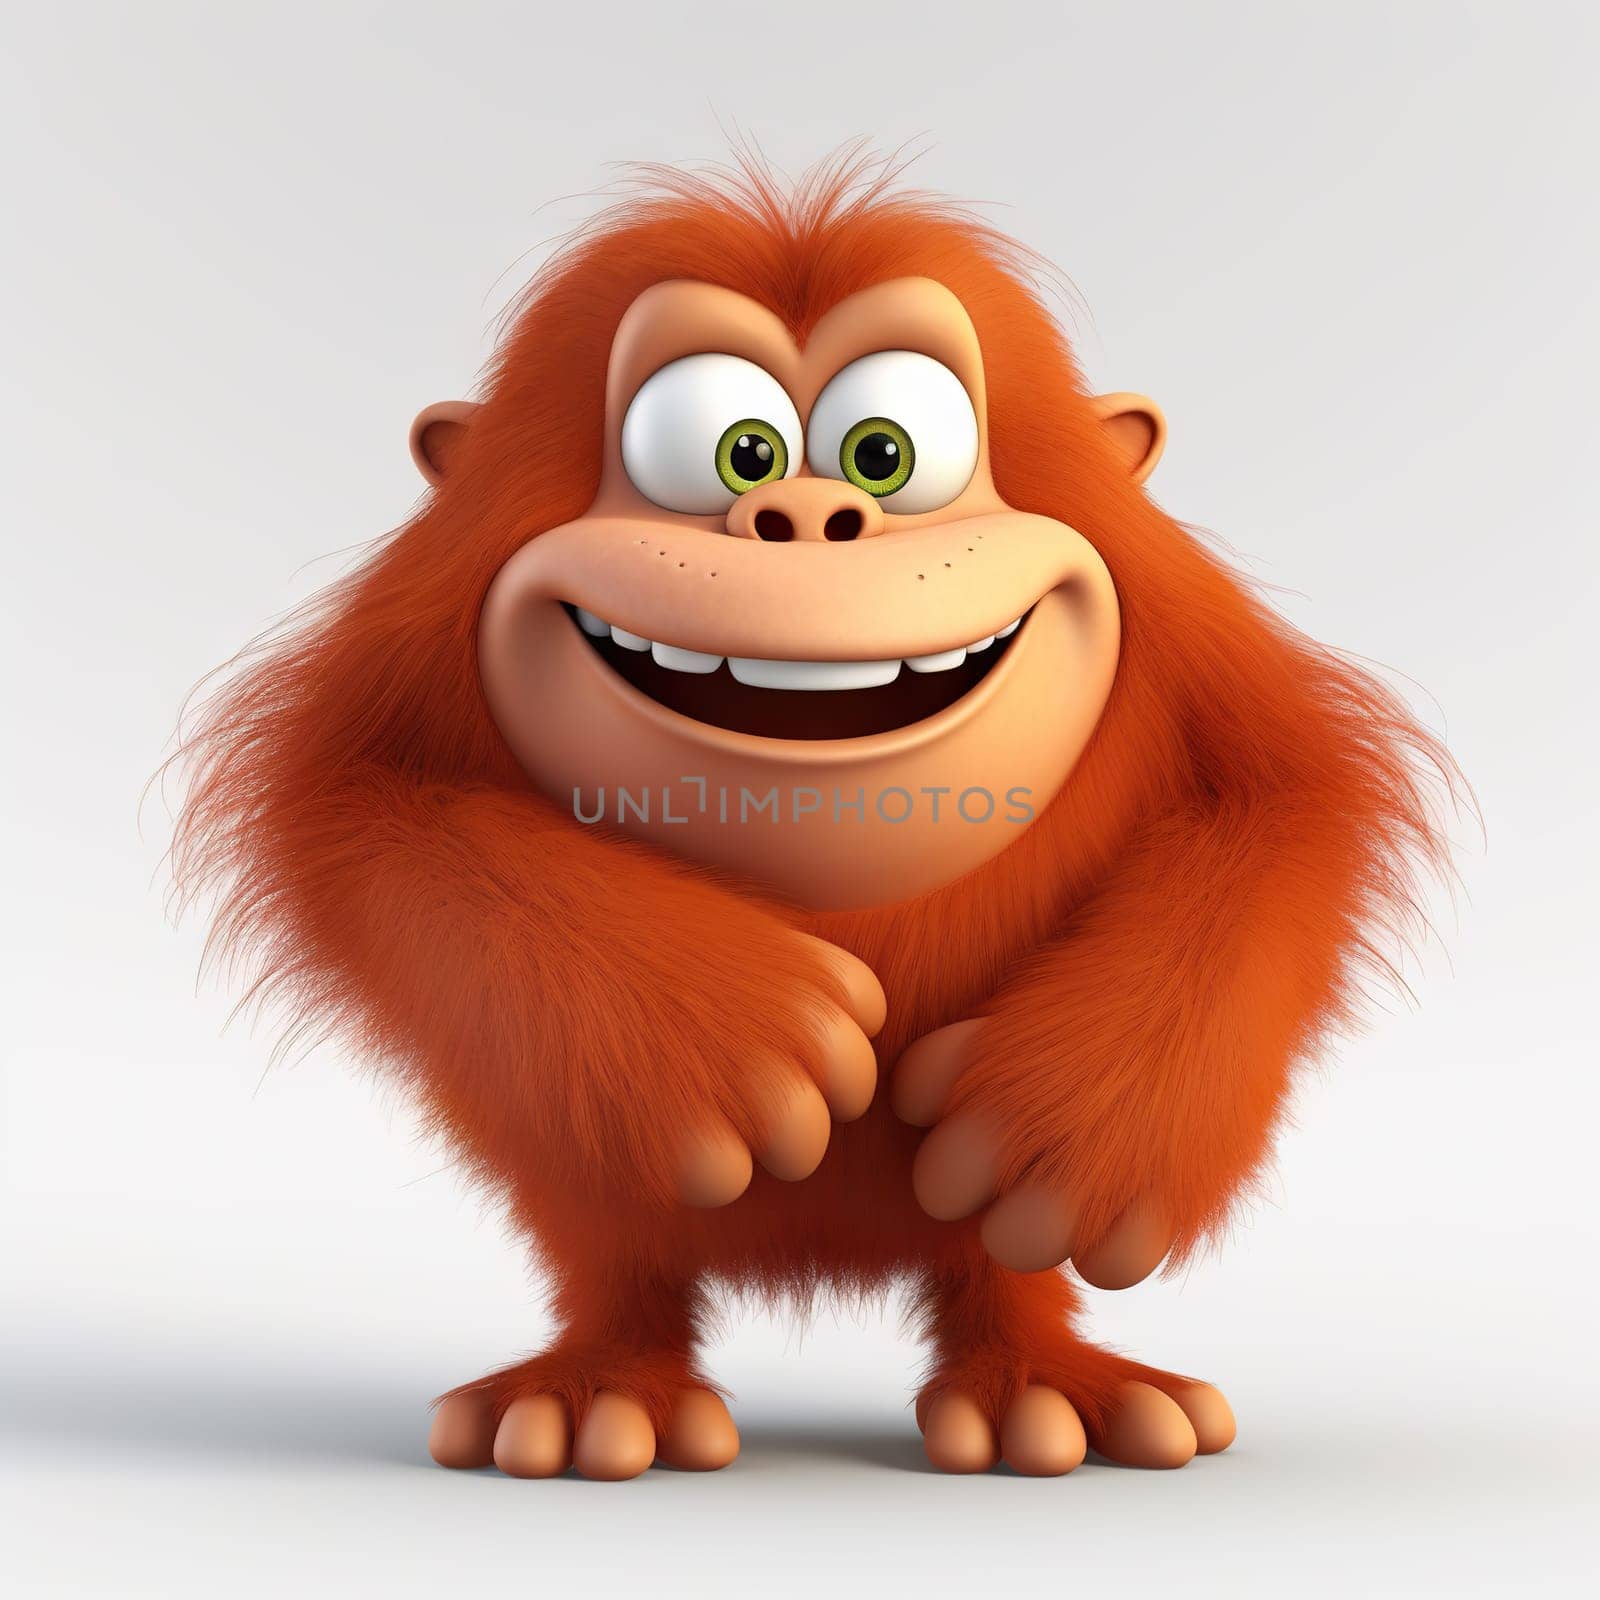 Cheerful Cartoon Orangutan by chrisroll